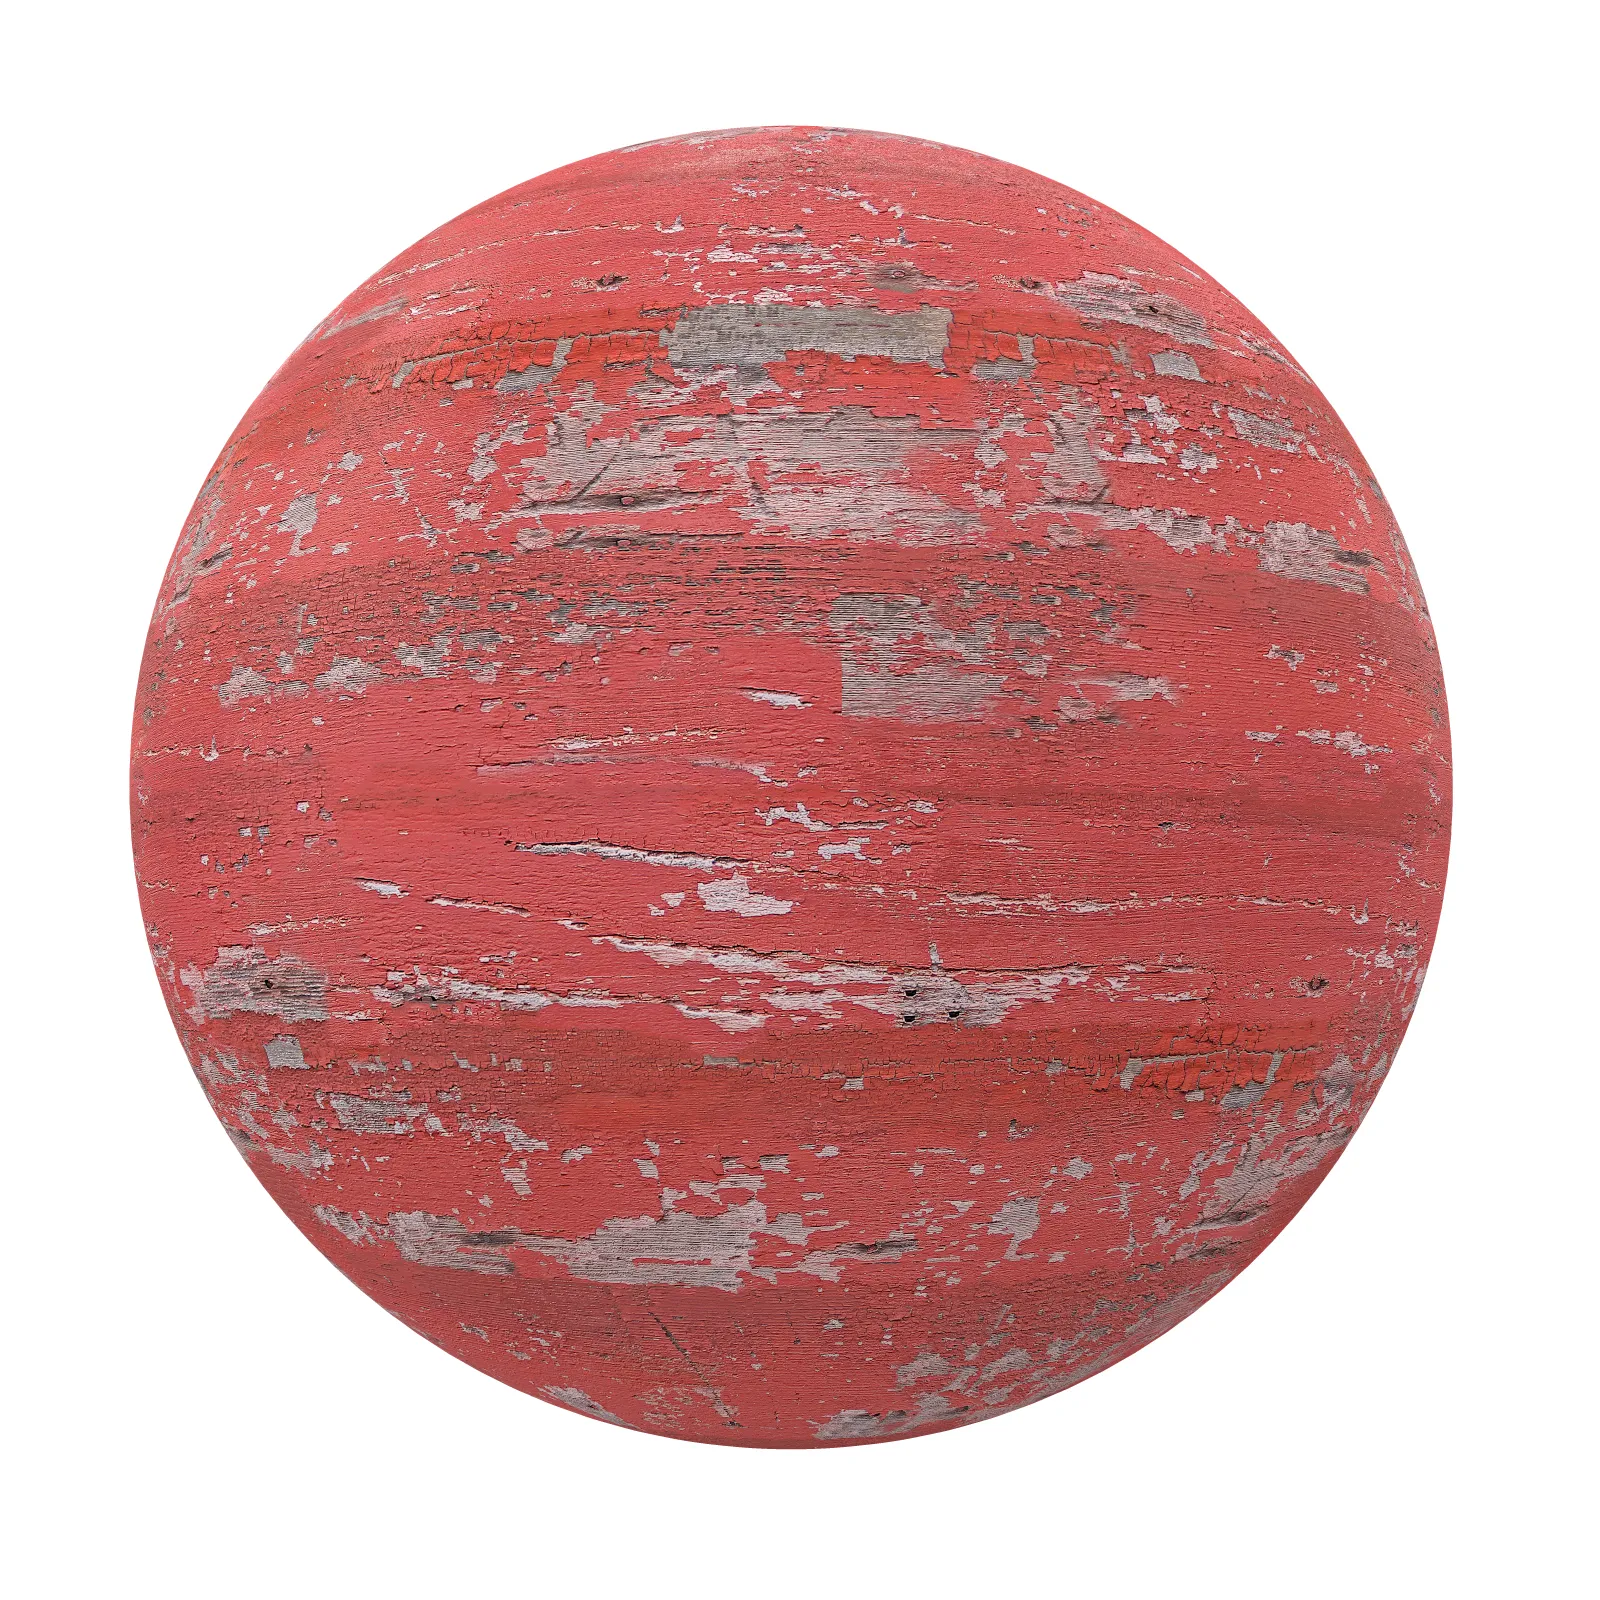 3ds Max Files – Texture – 8 – Wood Texture – 131 – Wood Texture by Minh Nguyen.